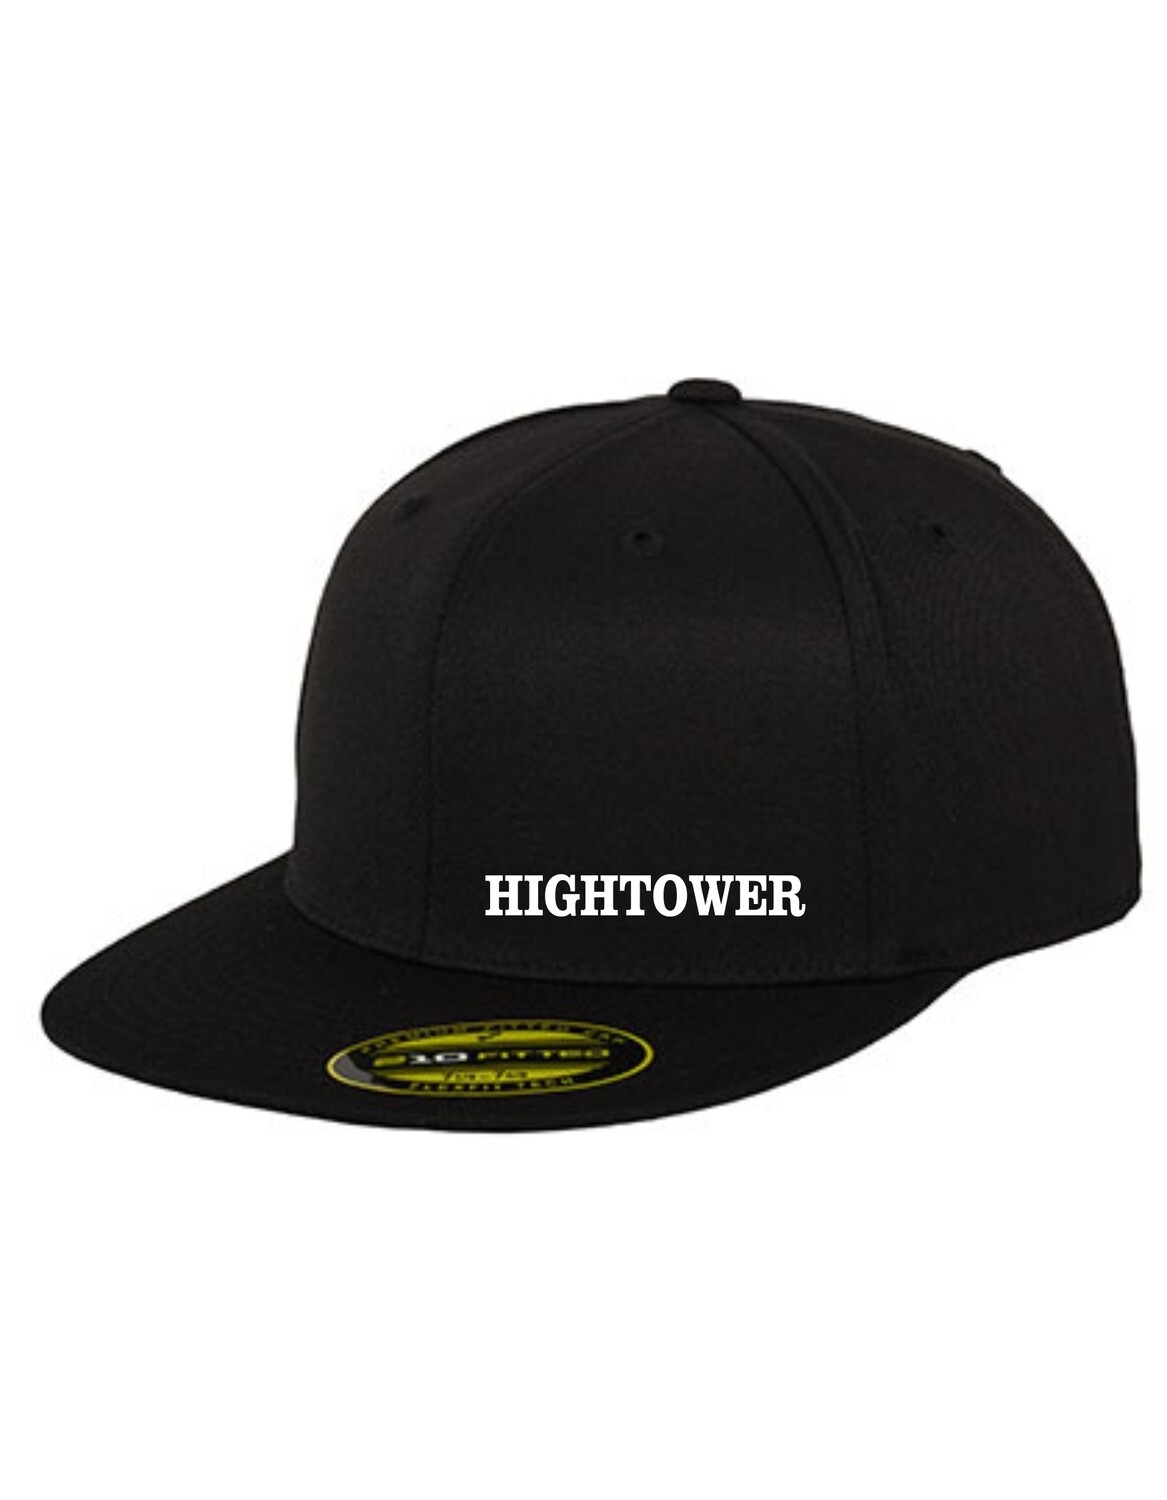 Full Cap Hightower Snapback